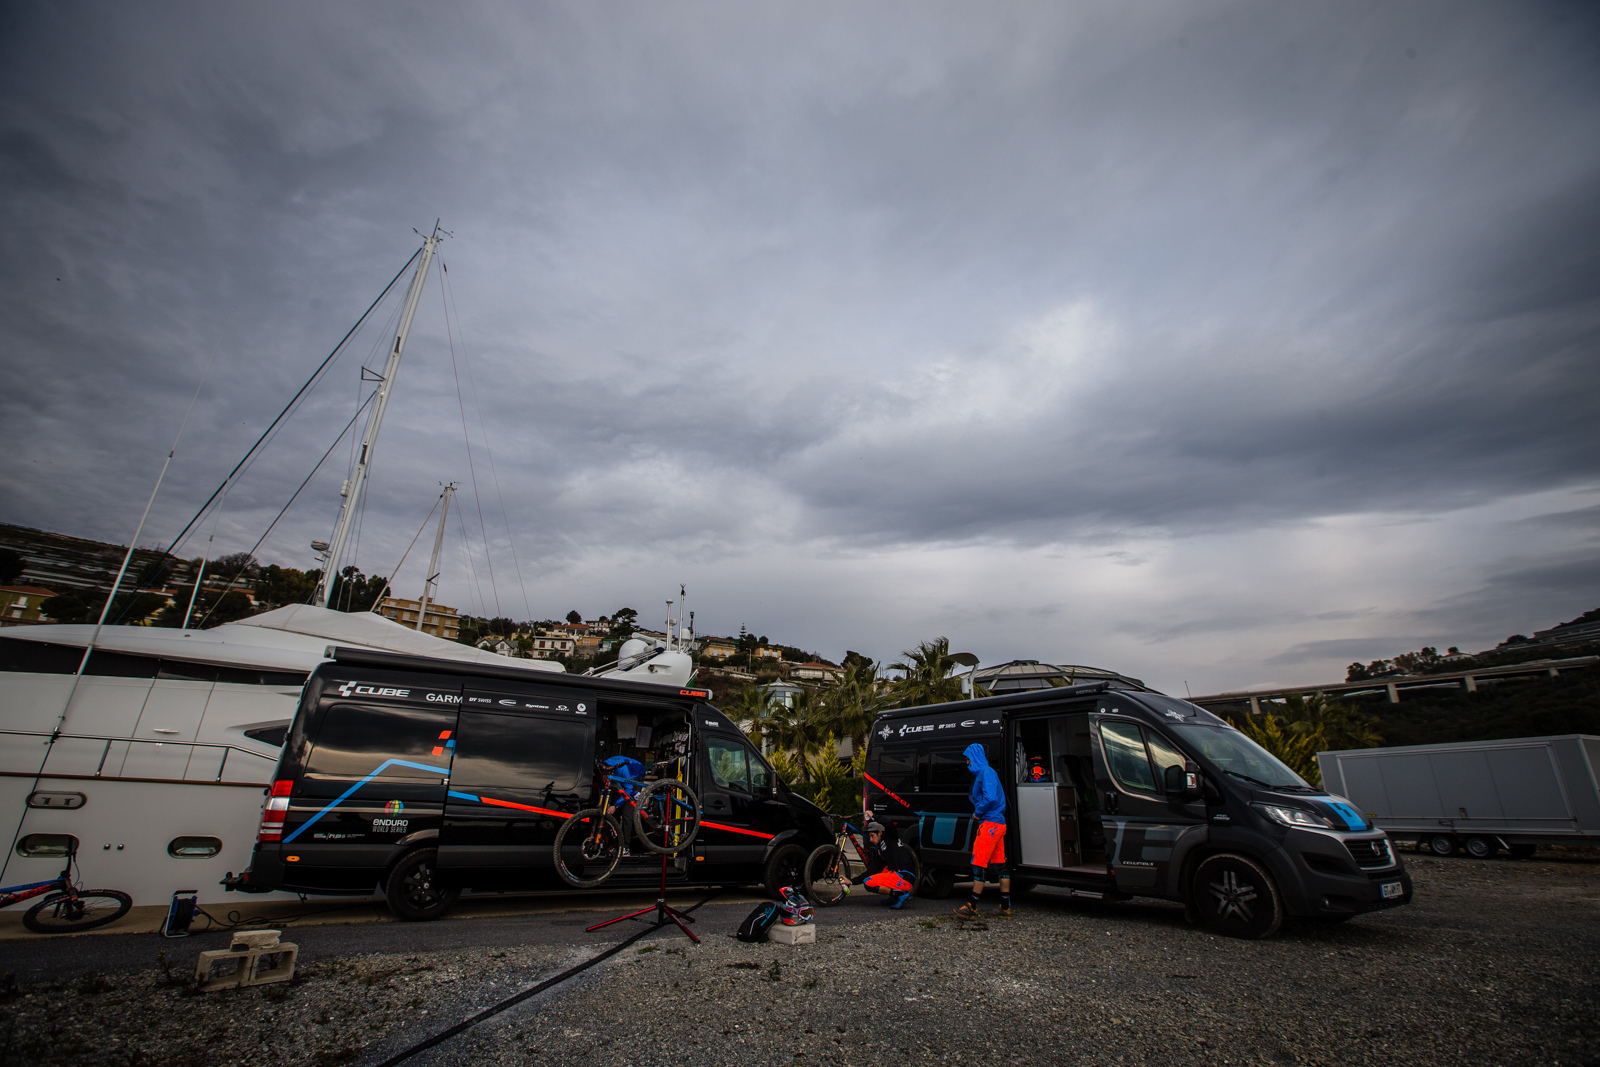 Jan a installé le camp de base du Cube Action Team sur la marina de Diano Marina.